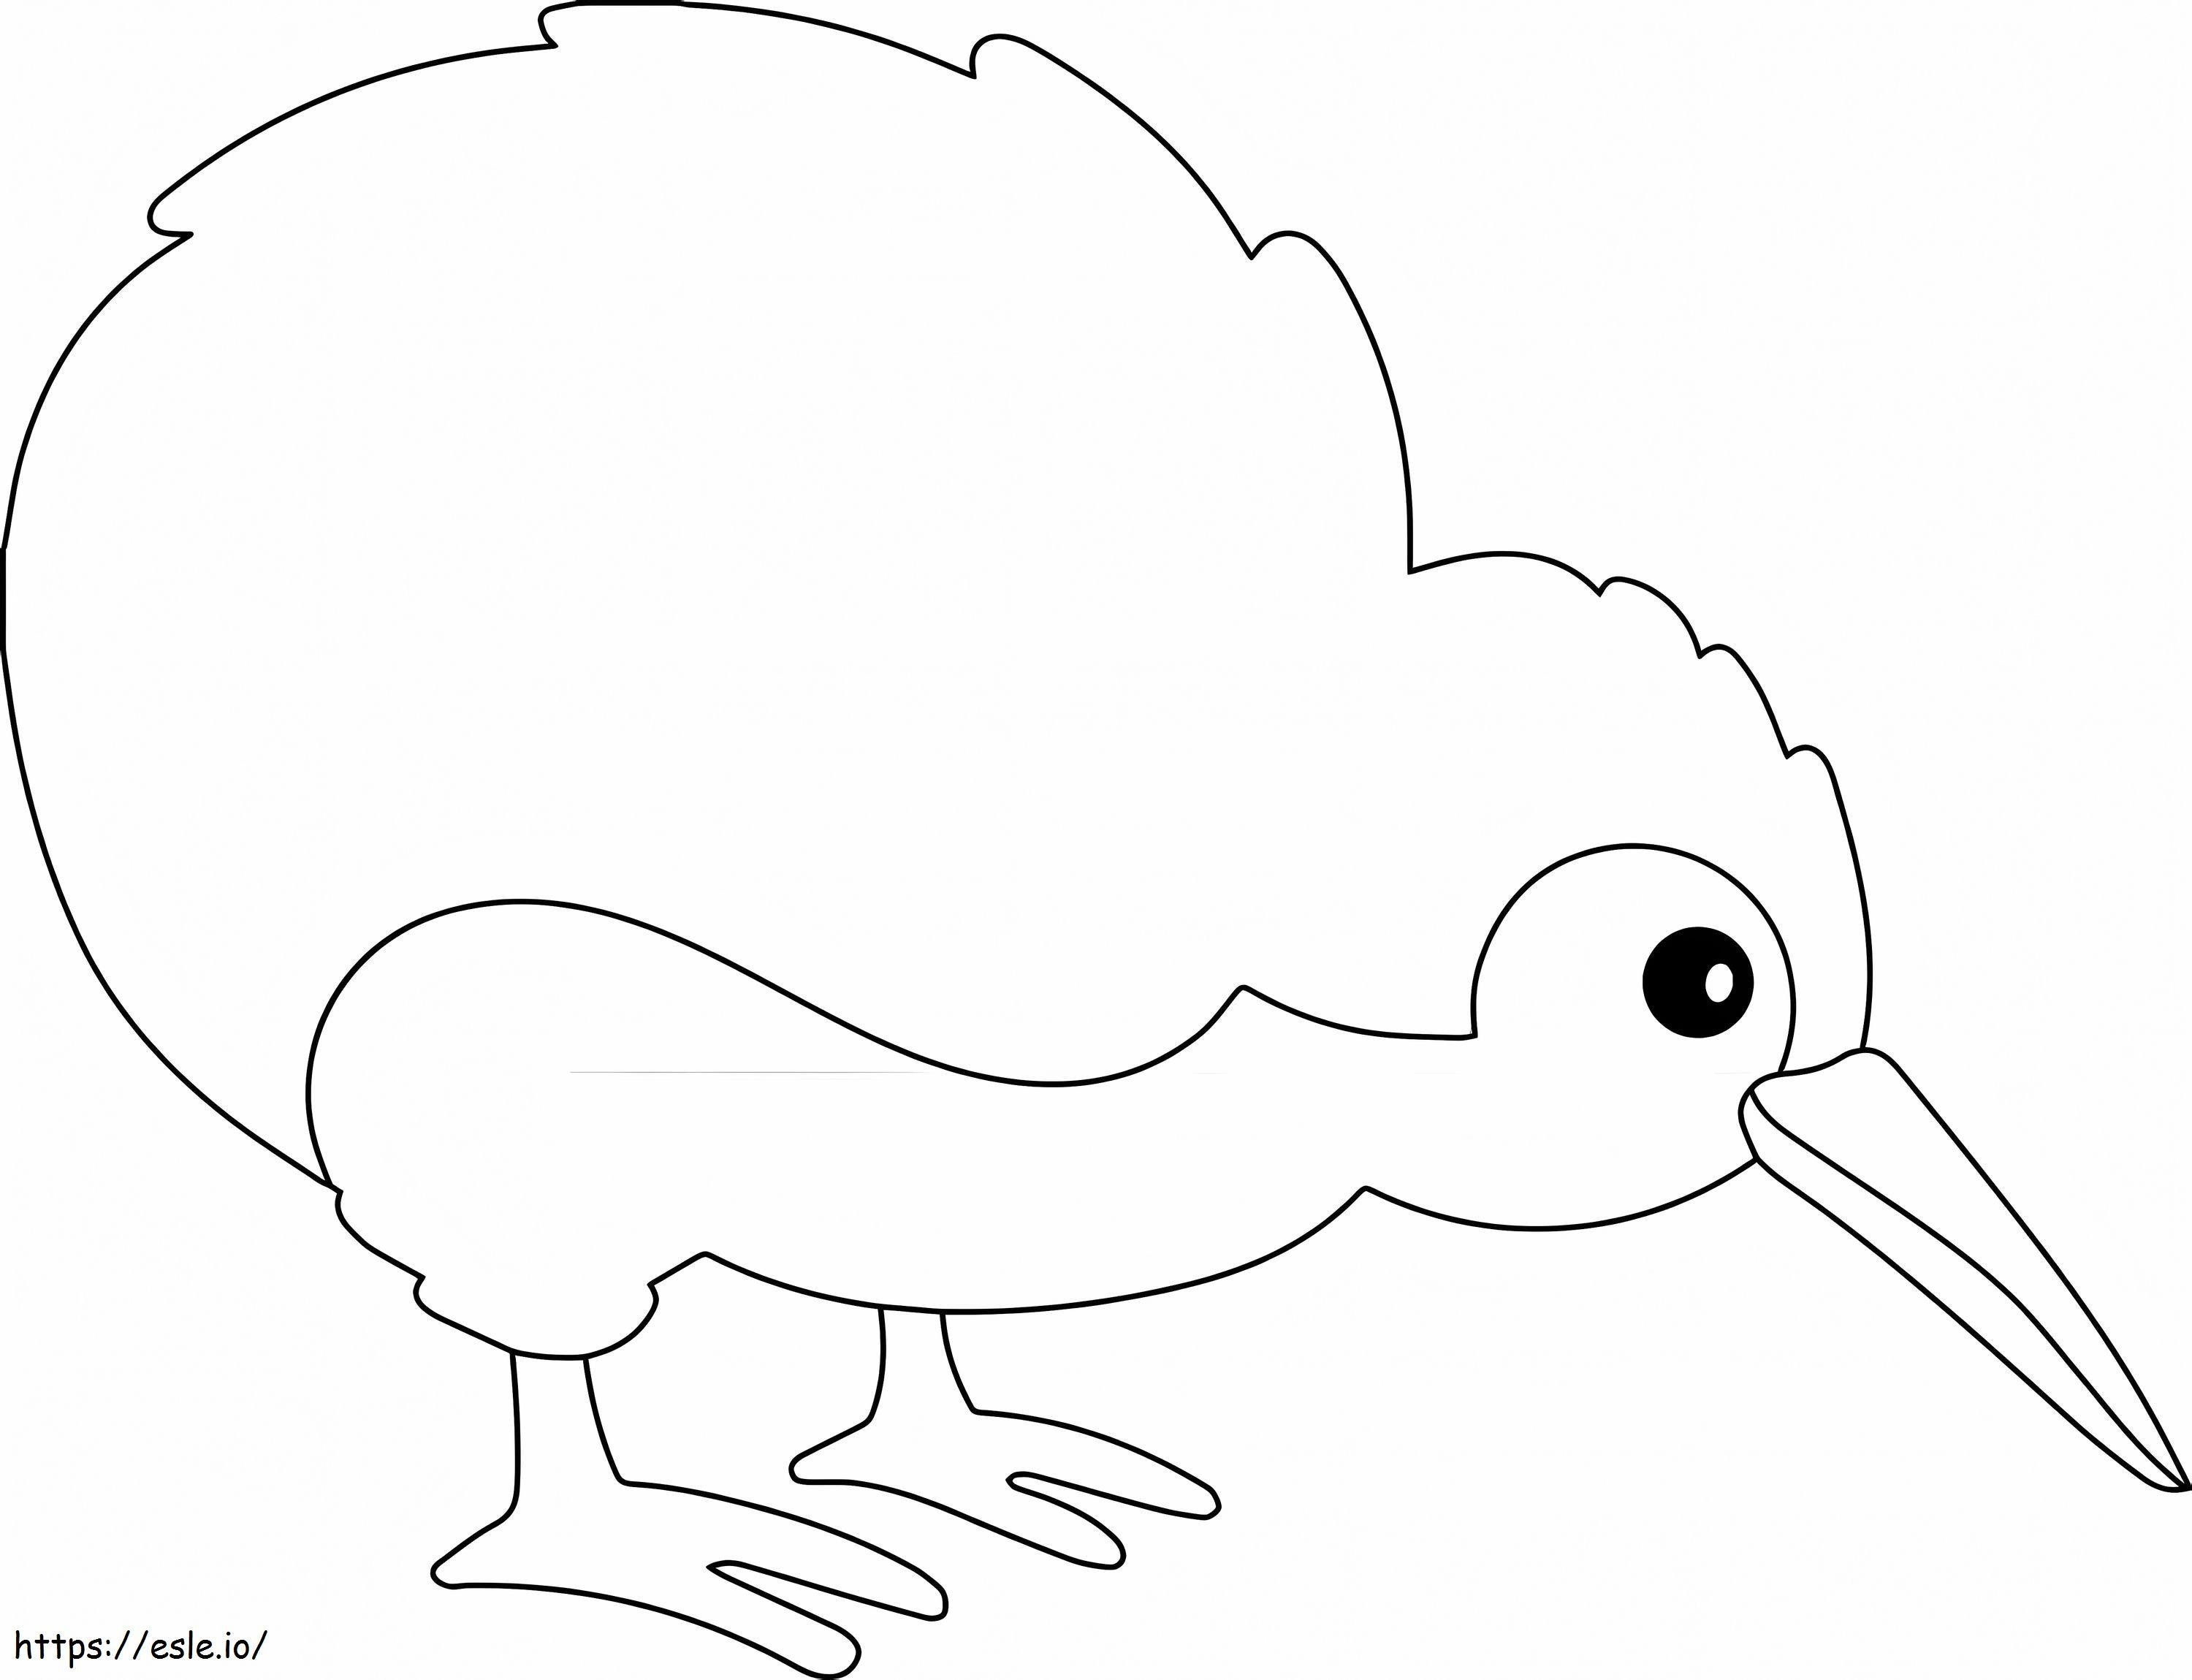 Perfect Kiwi Bird coloring page